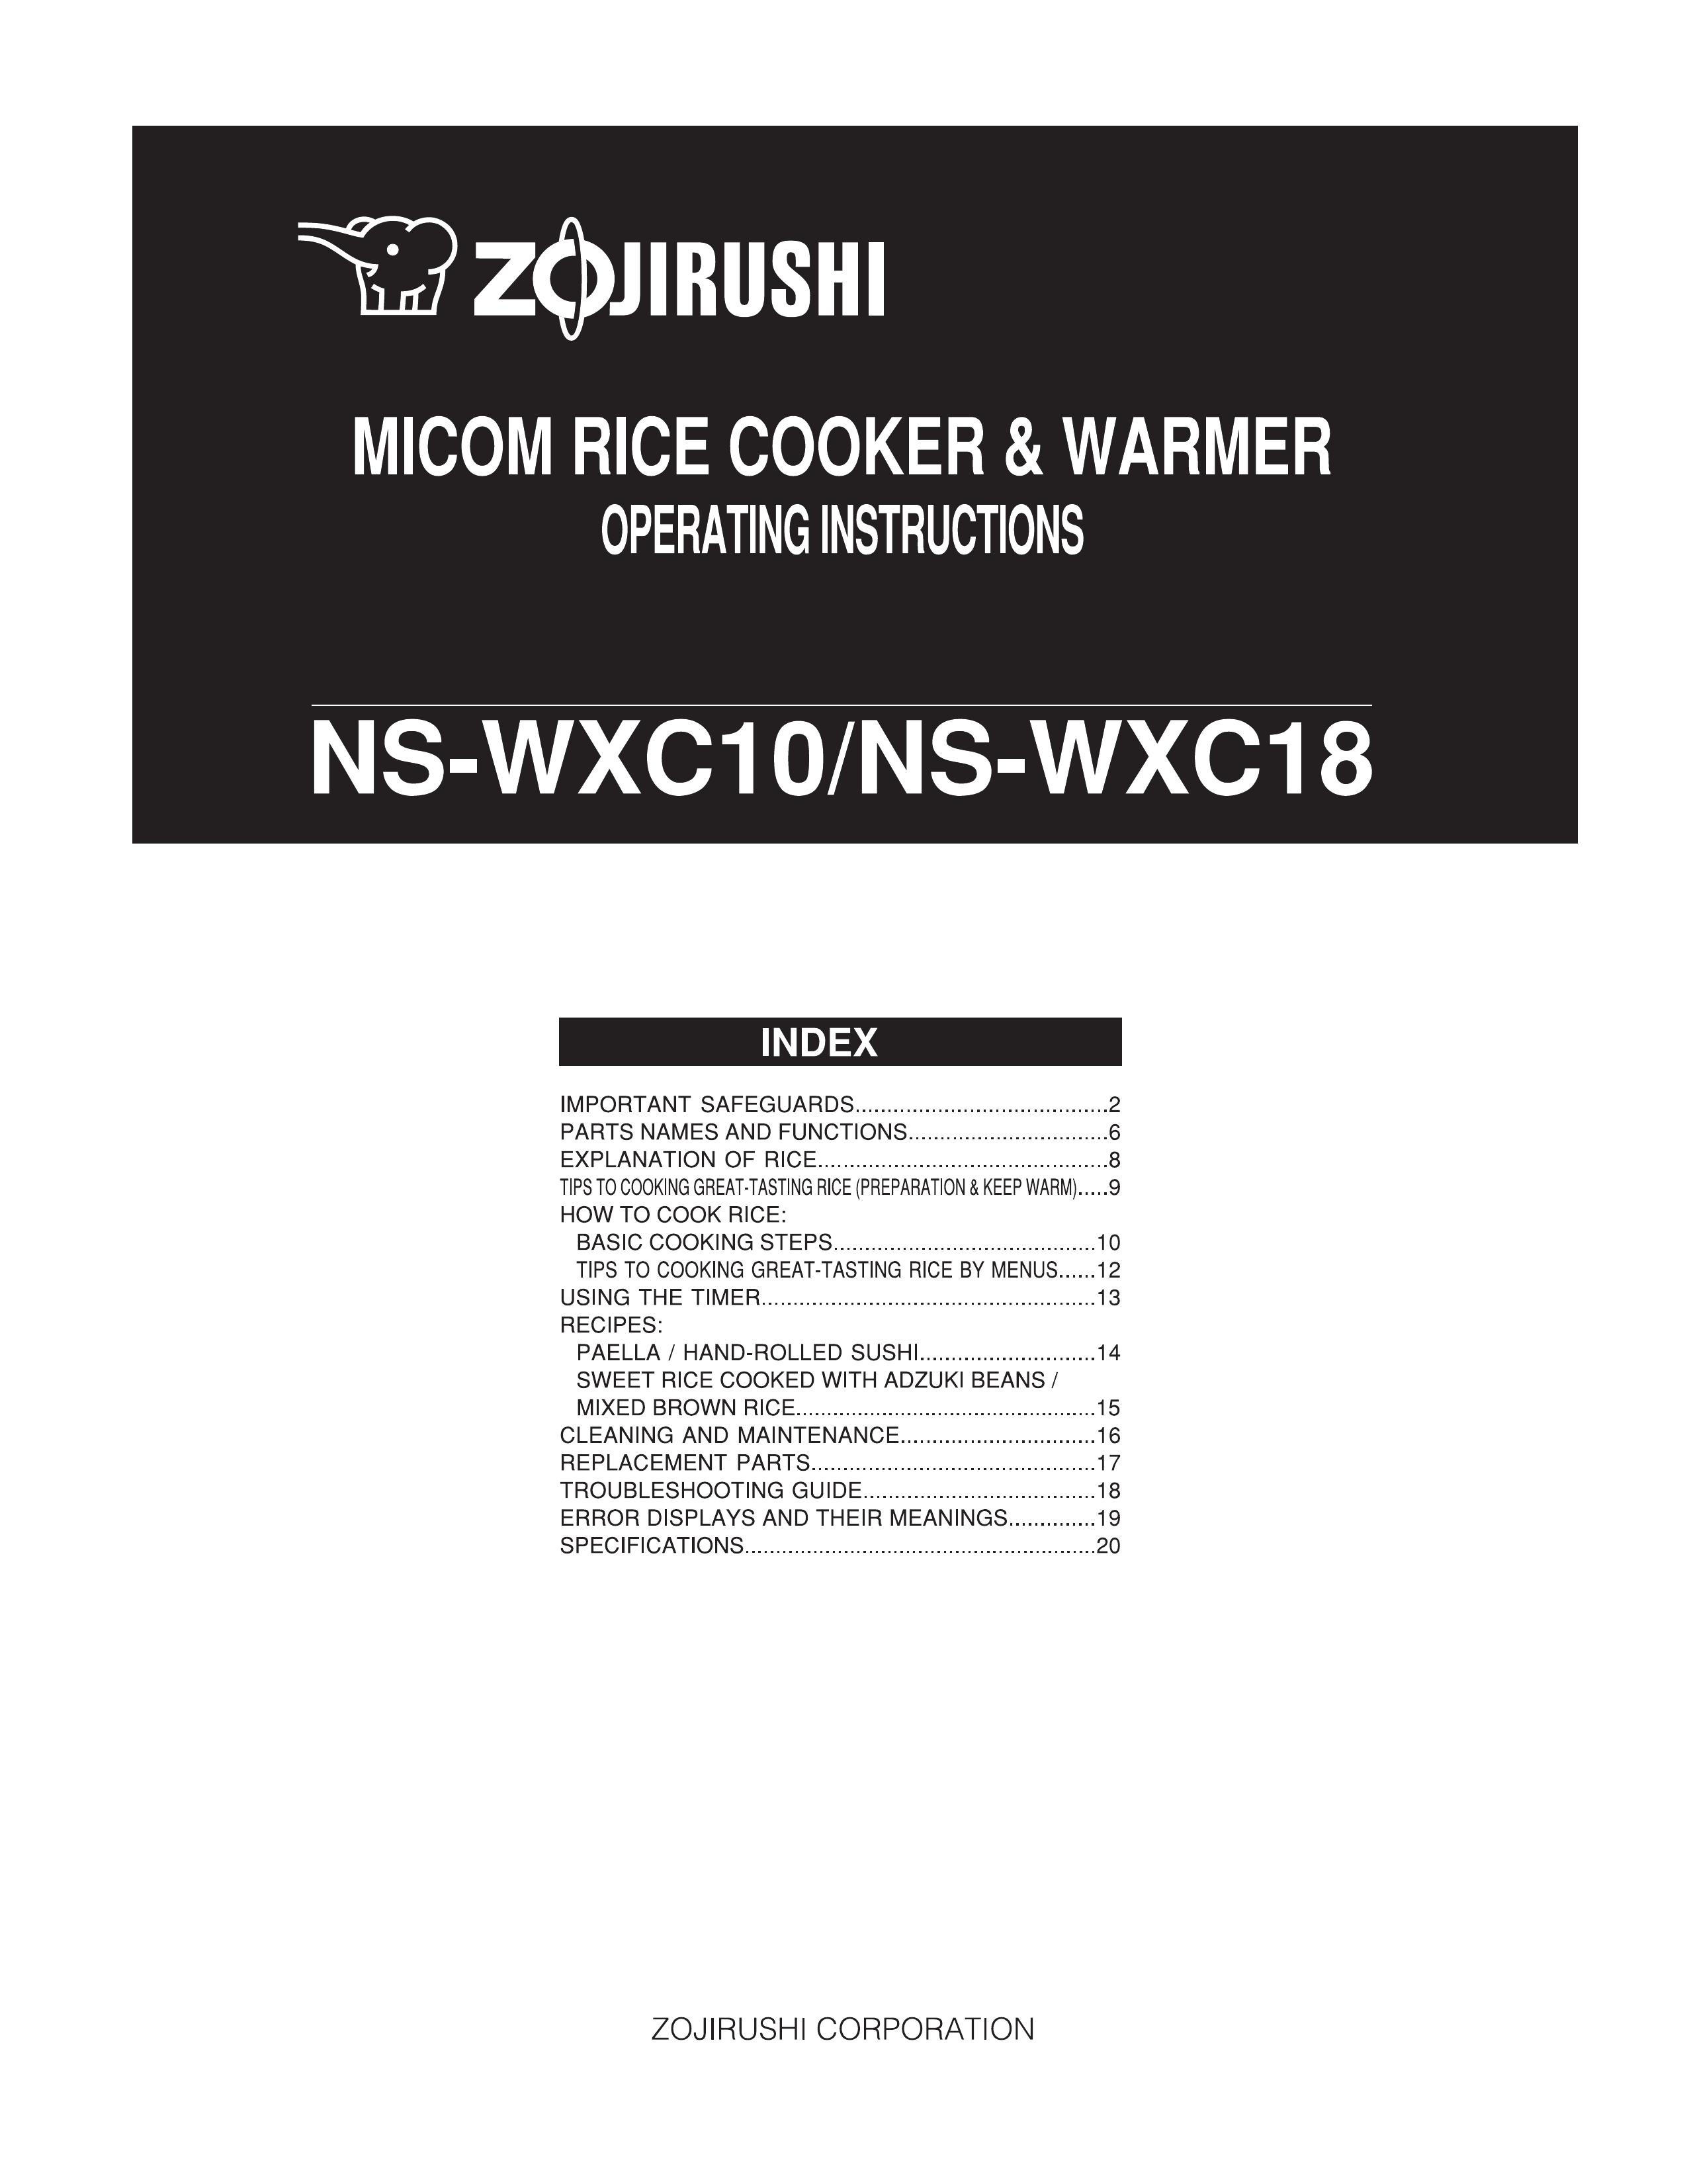 Zojirushi NS-WXC10 Rice Cooker User Manual